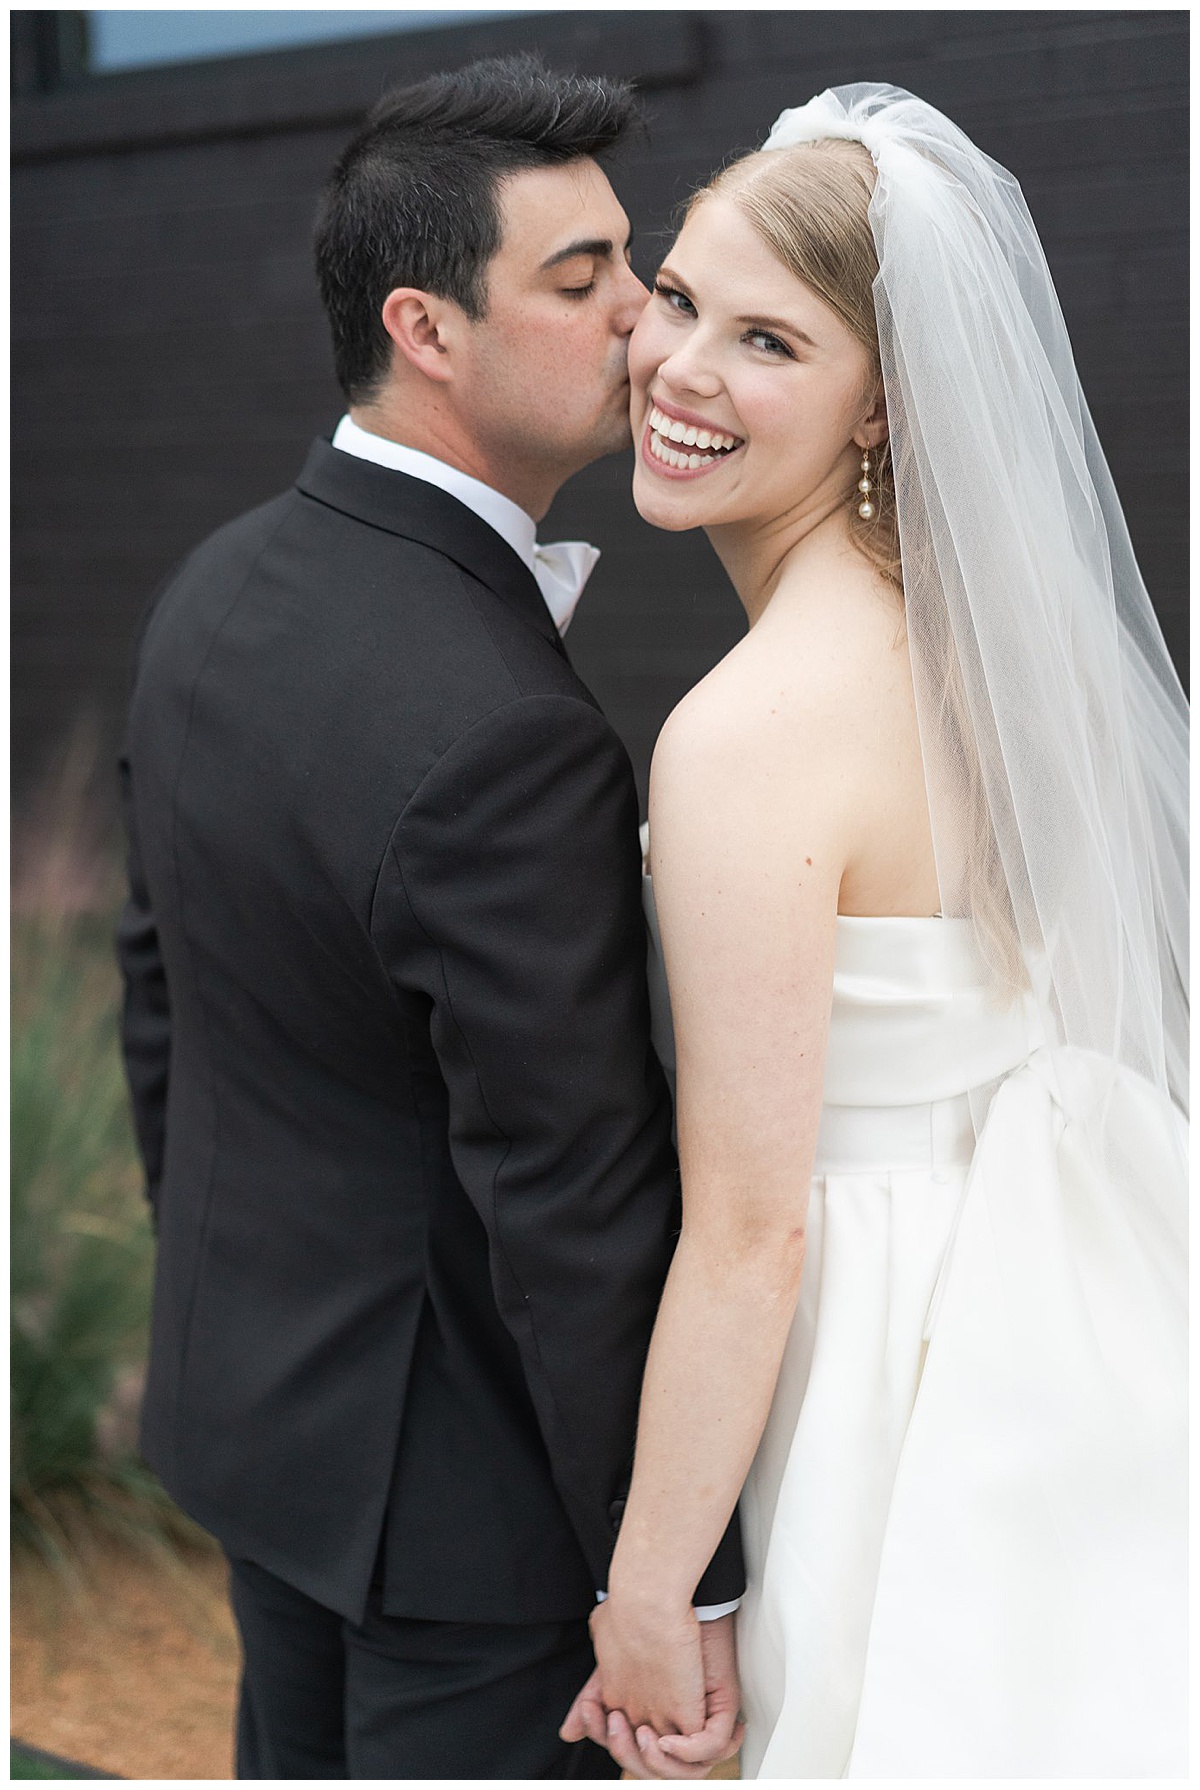 Man kisses woman on cheek as she smiles big for Swish & Click Photography